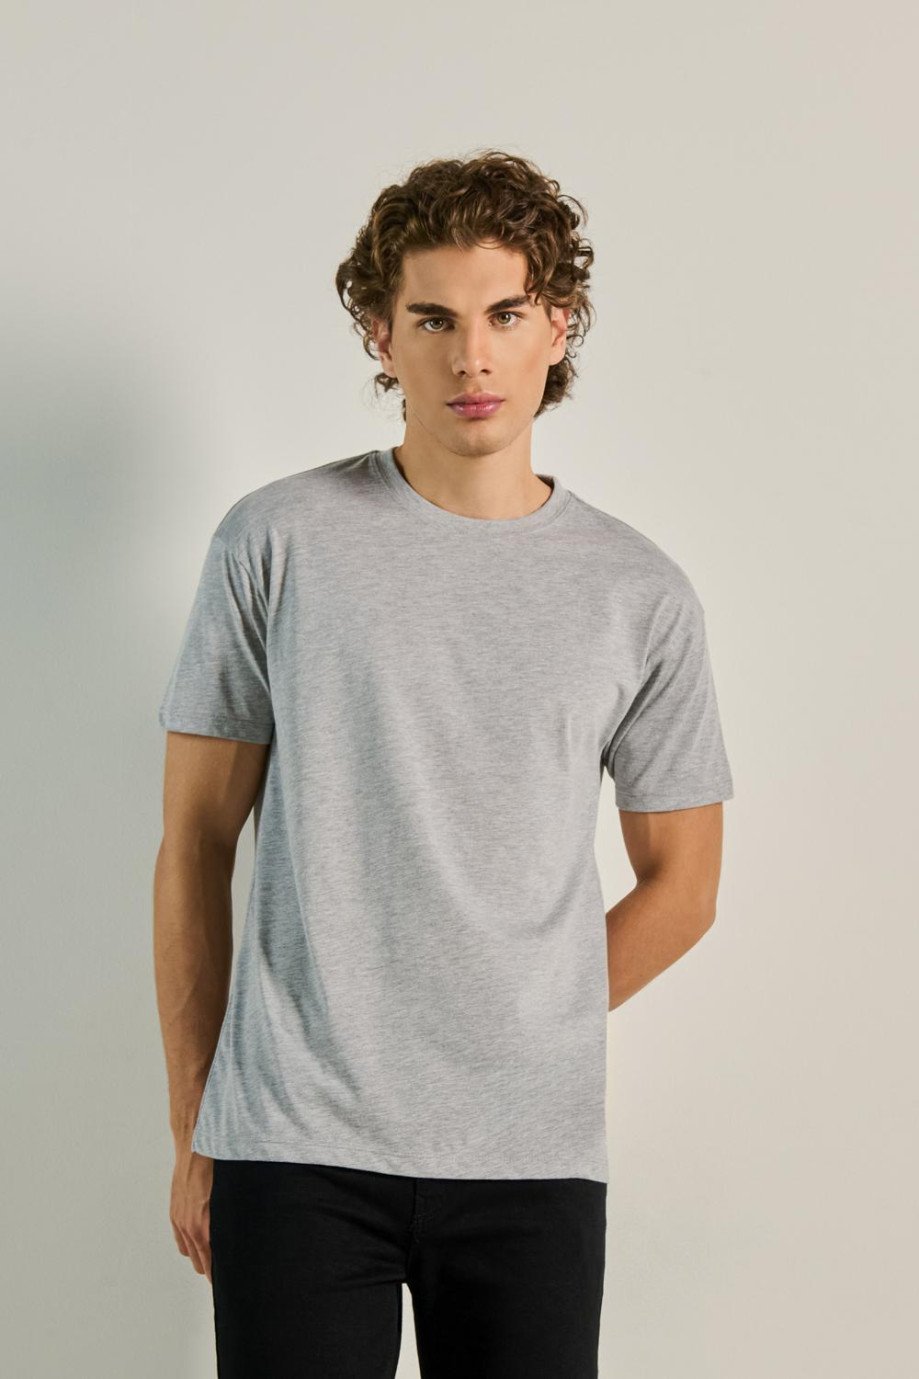 Camiseta gris clara manga corta con efecto jaspe